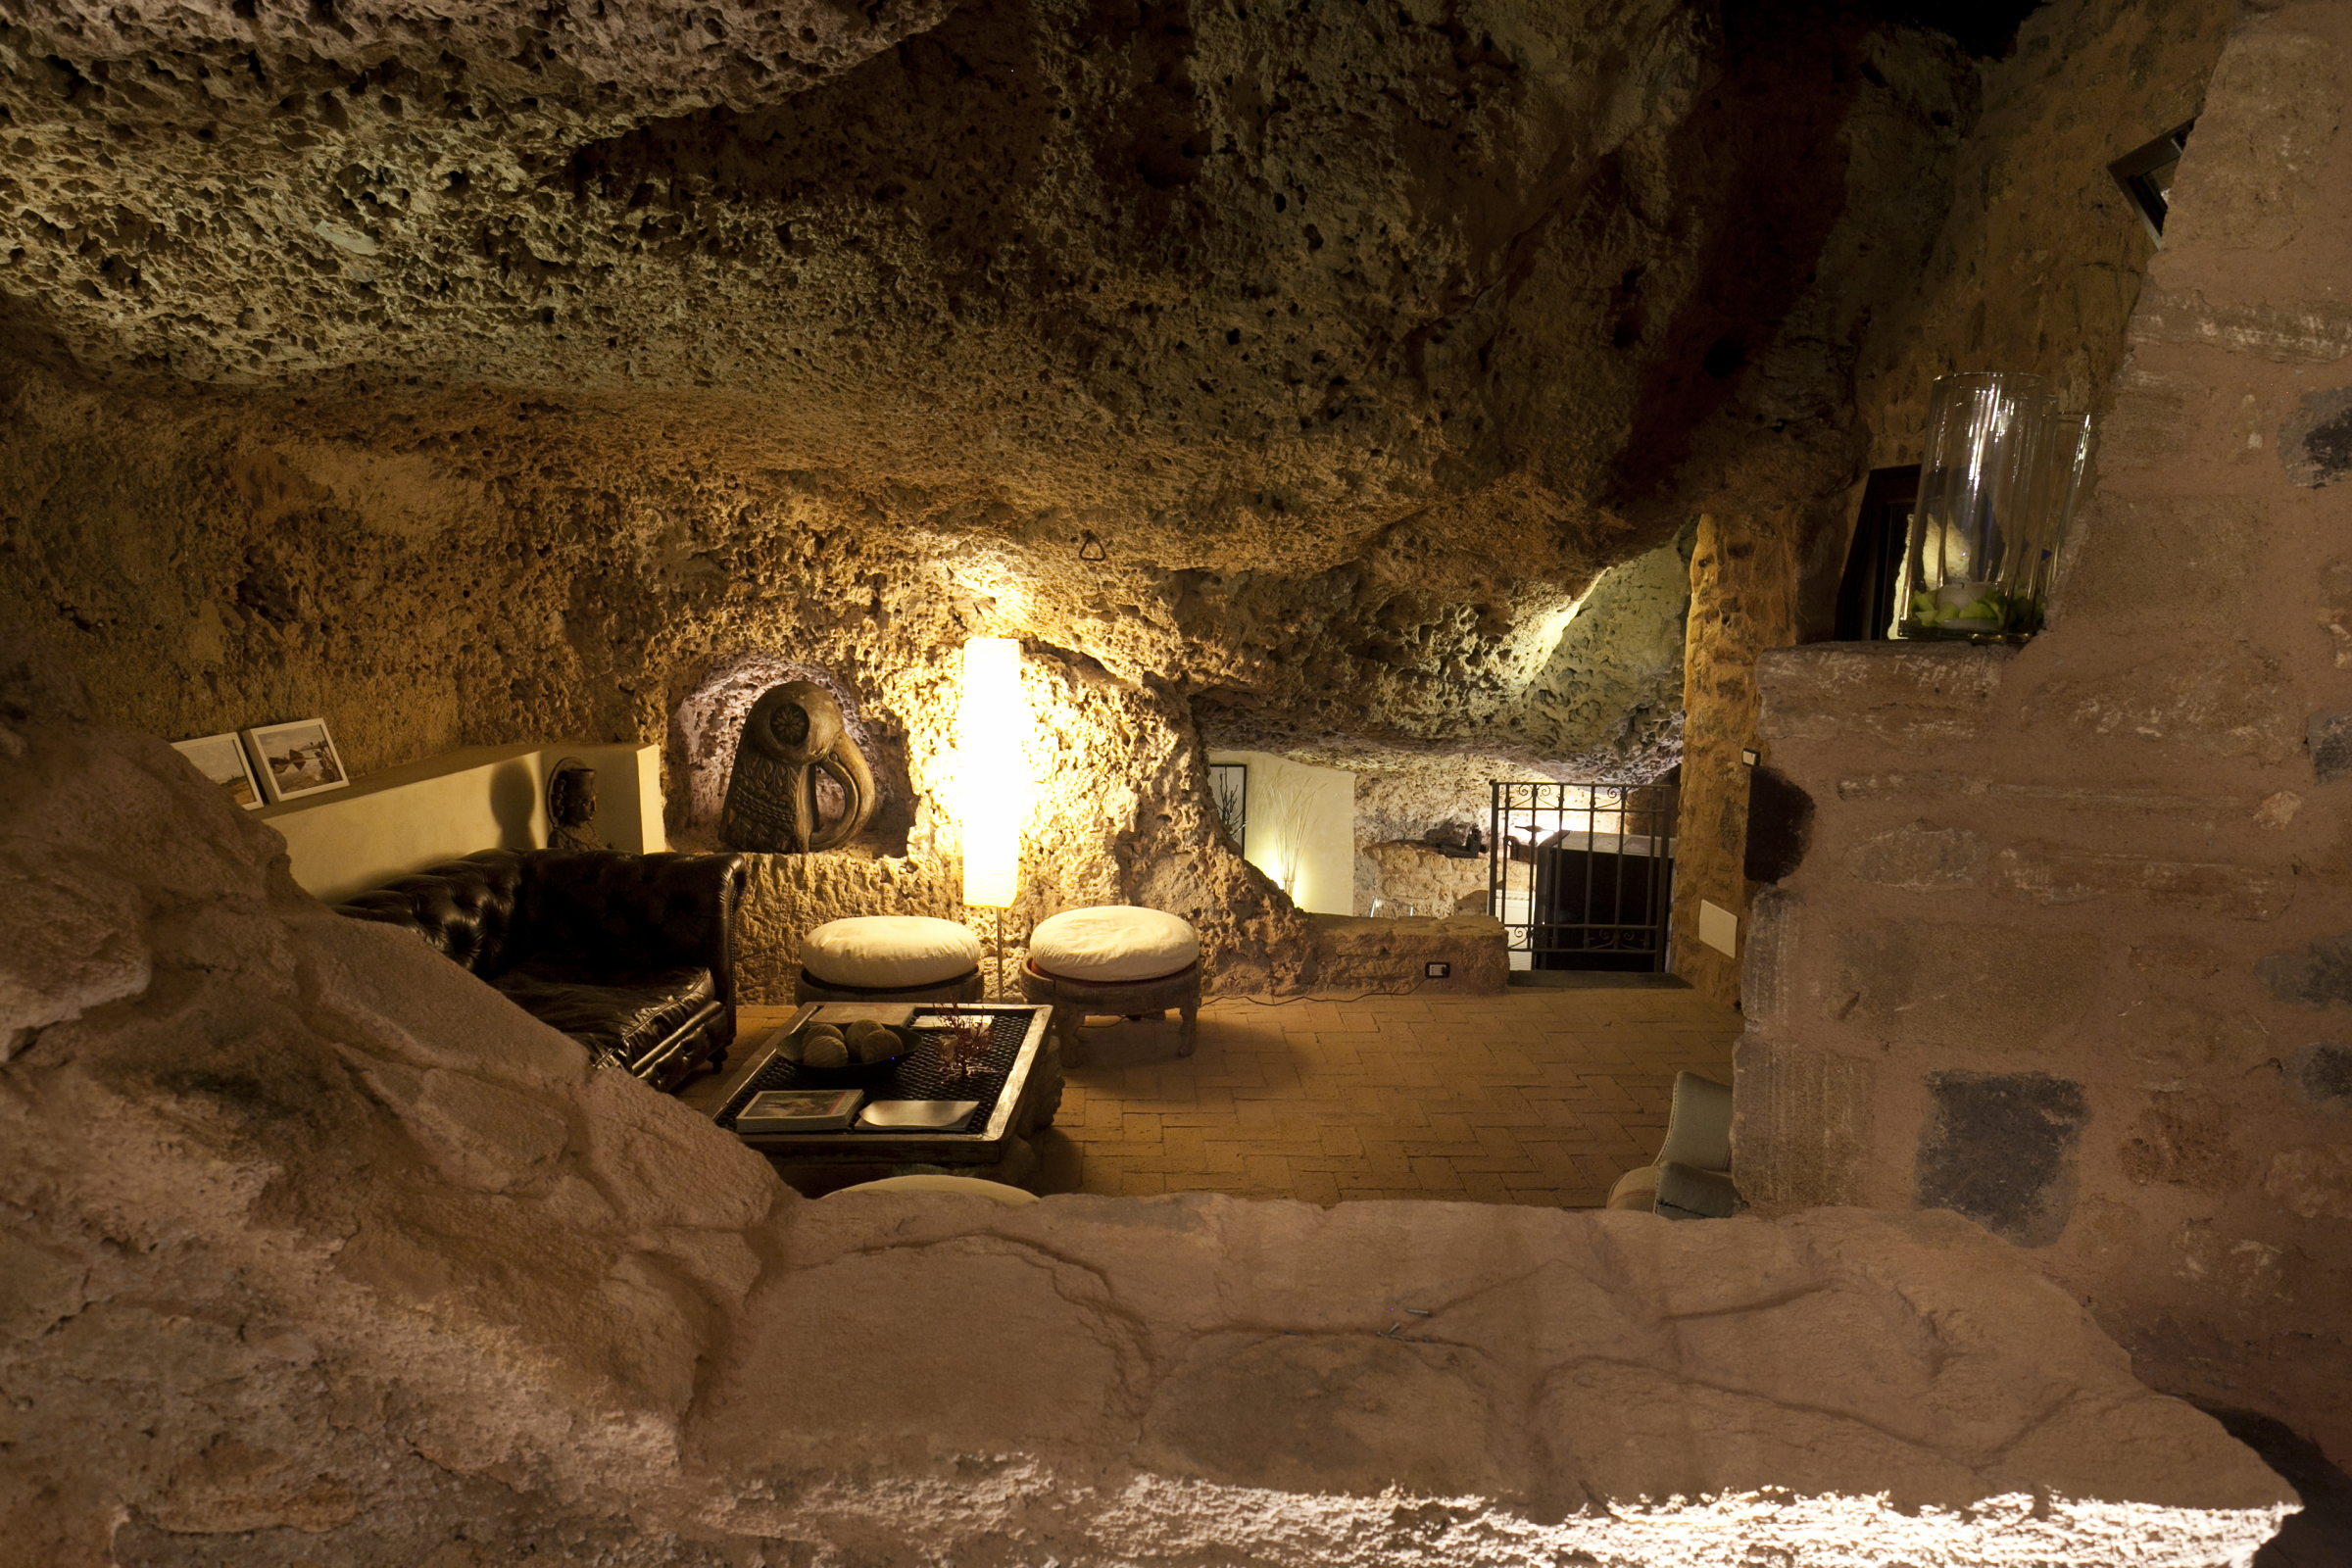 Cave home. Пещерный дворец Cave Palace Ranch, Юта, США. Жилая пещера. Уютная пещера. Пещера жилище.